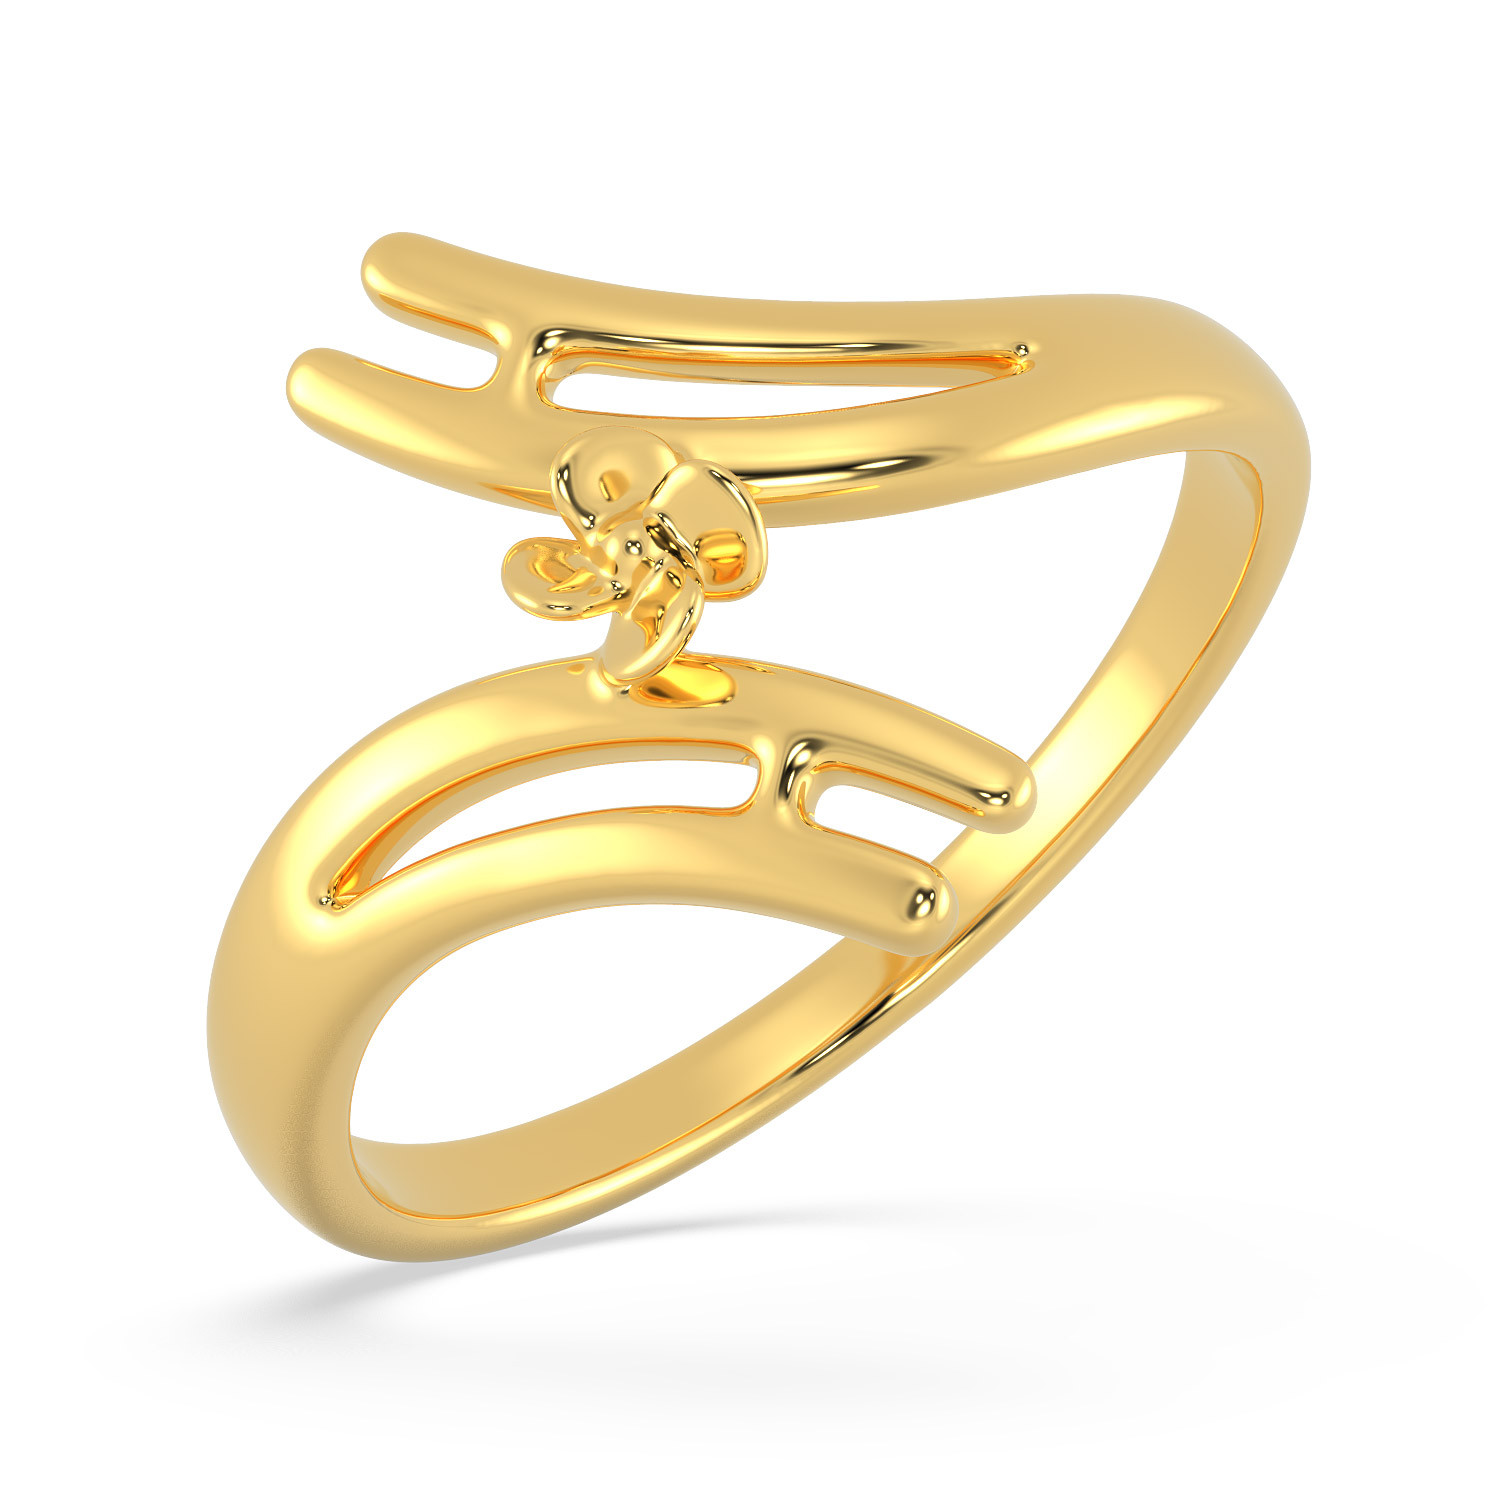 Malabar 22 KT Gold Studded Casual Ring SKYFRDZ032